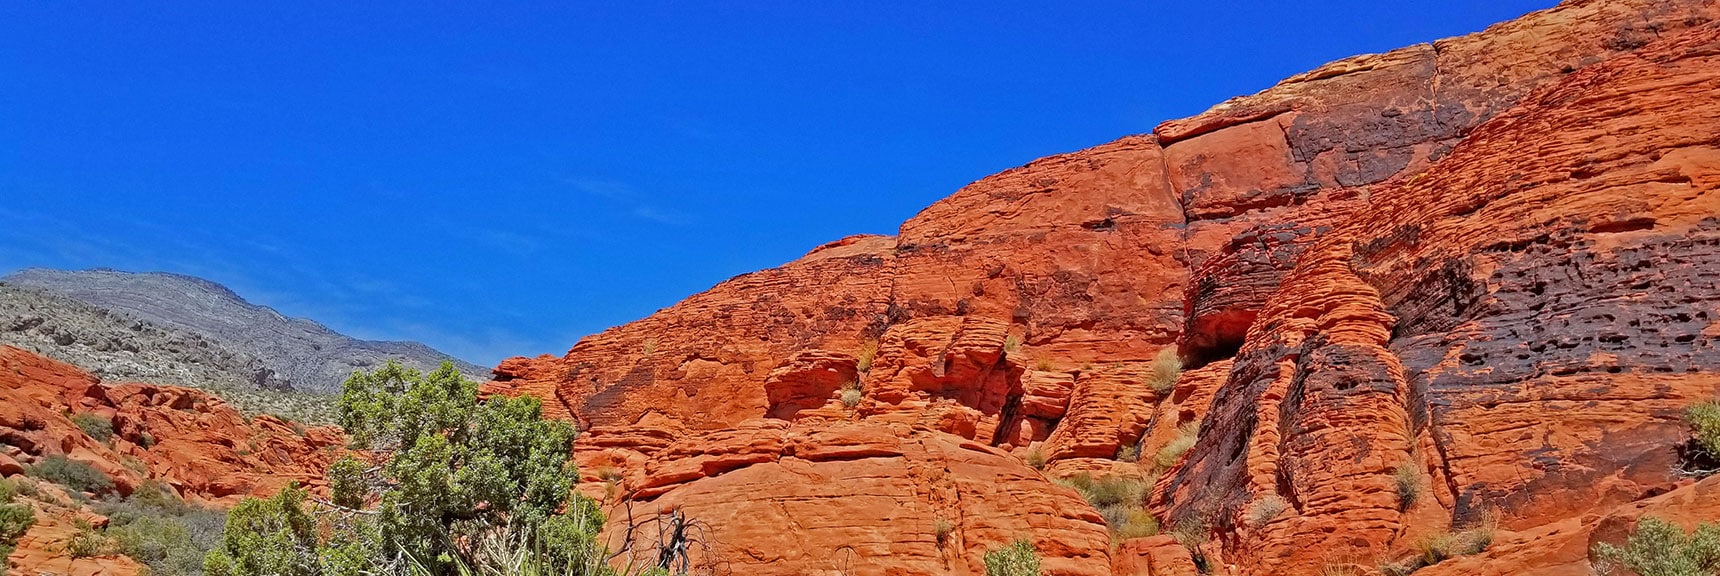 More High Cliffs | Little Red Rock Las Vegas, Nevada, Near La Madre Mountains Wilderness